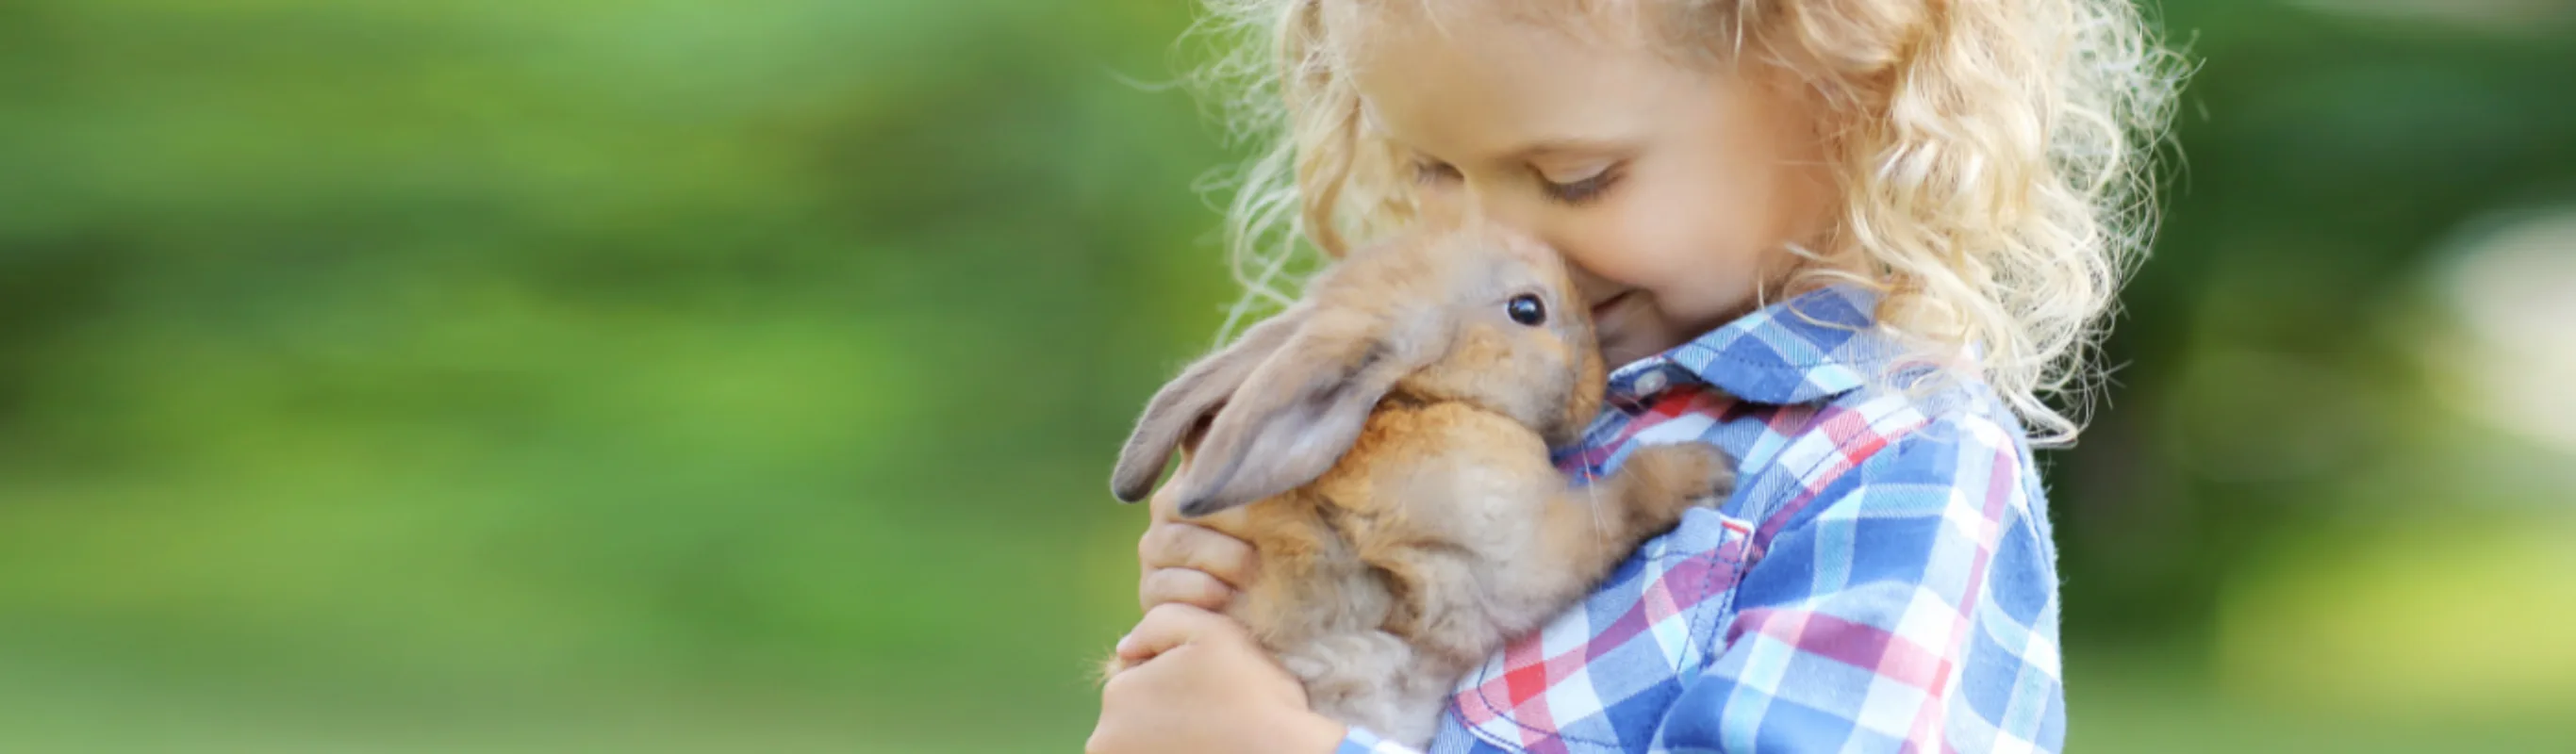 Girl Hugging a Brown Rabbit Outside